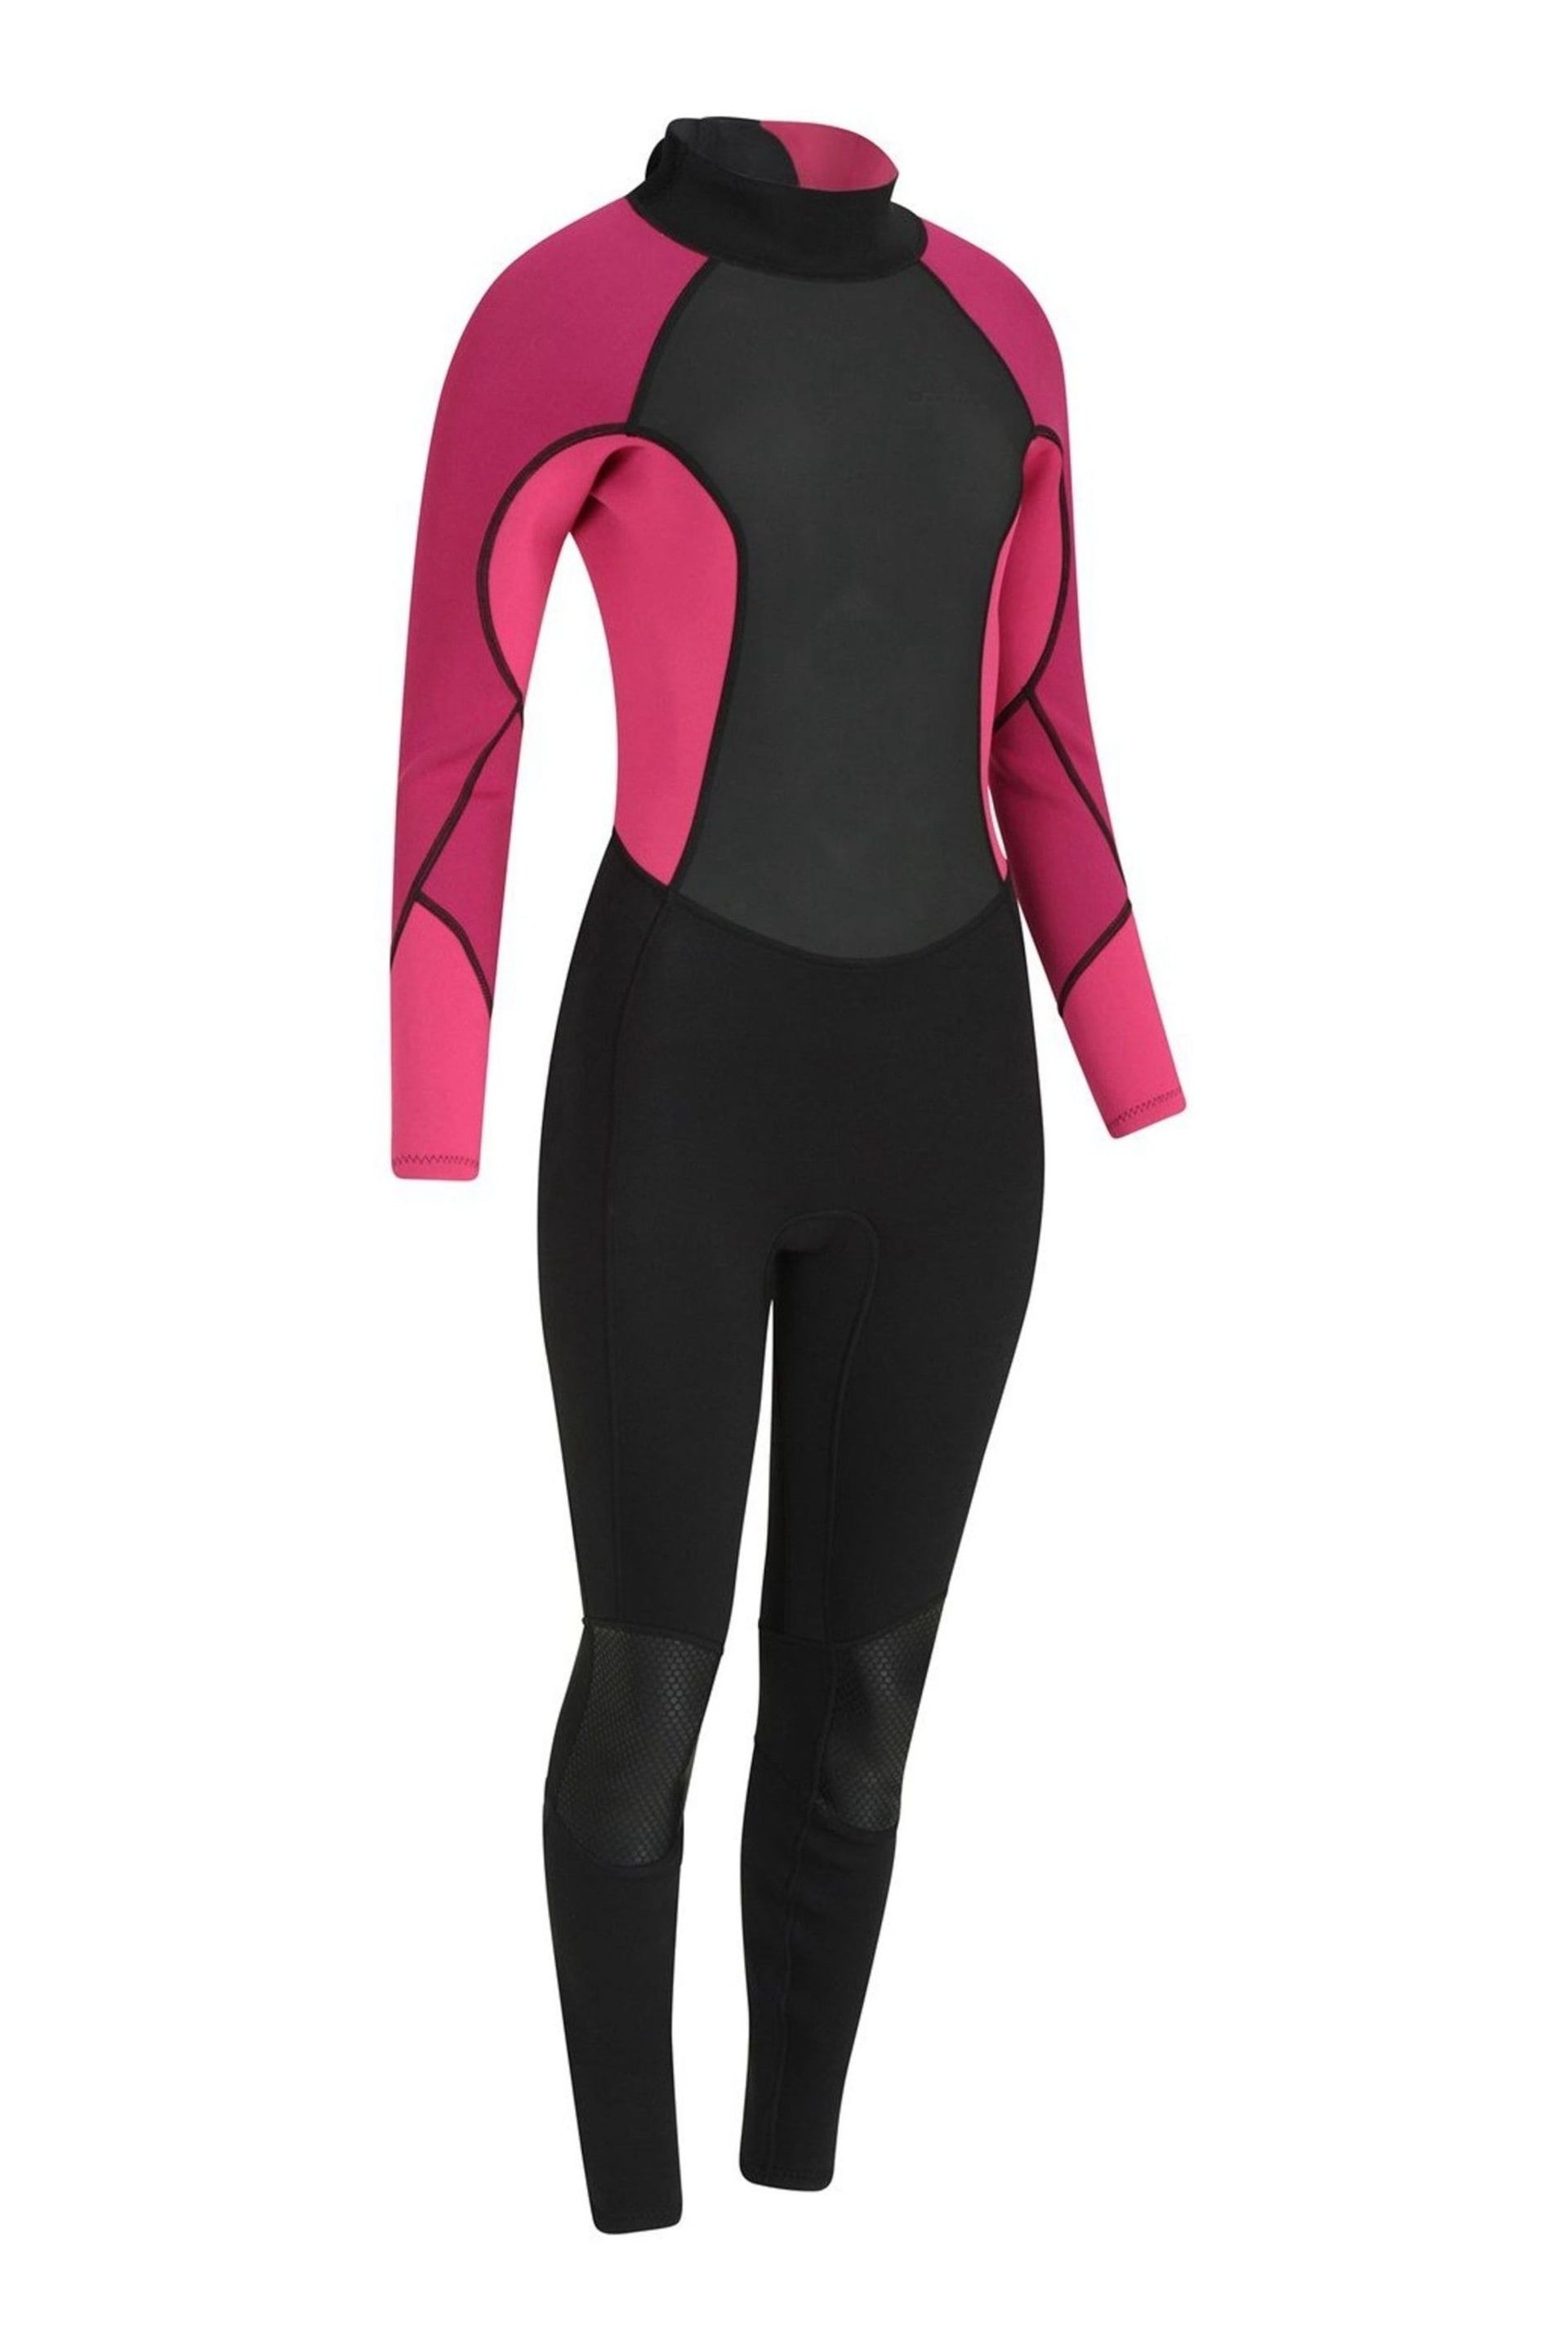 Mountain Warehouse Pink Womens Full Length Neoprene Wetsuit - Image 2 of 4